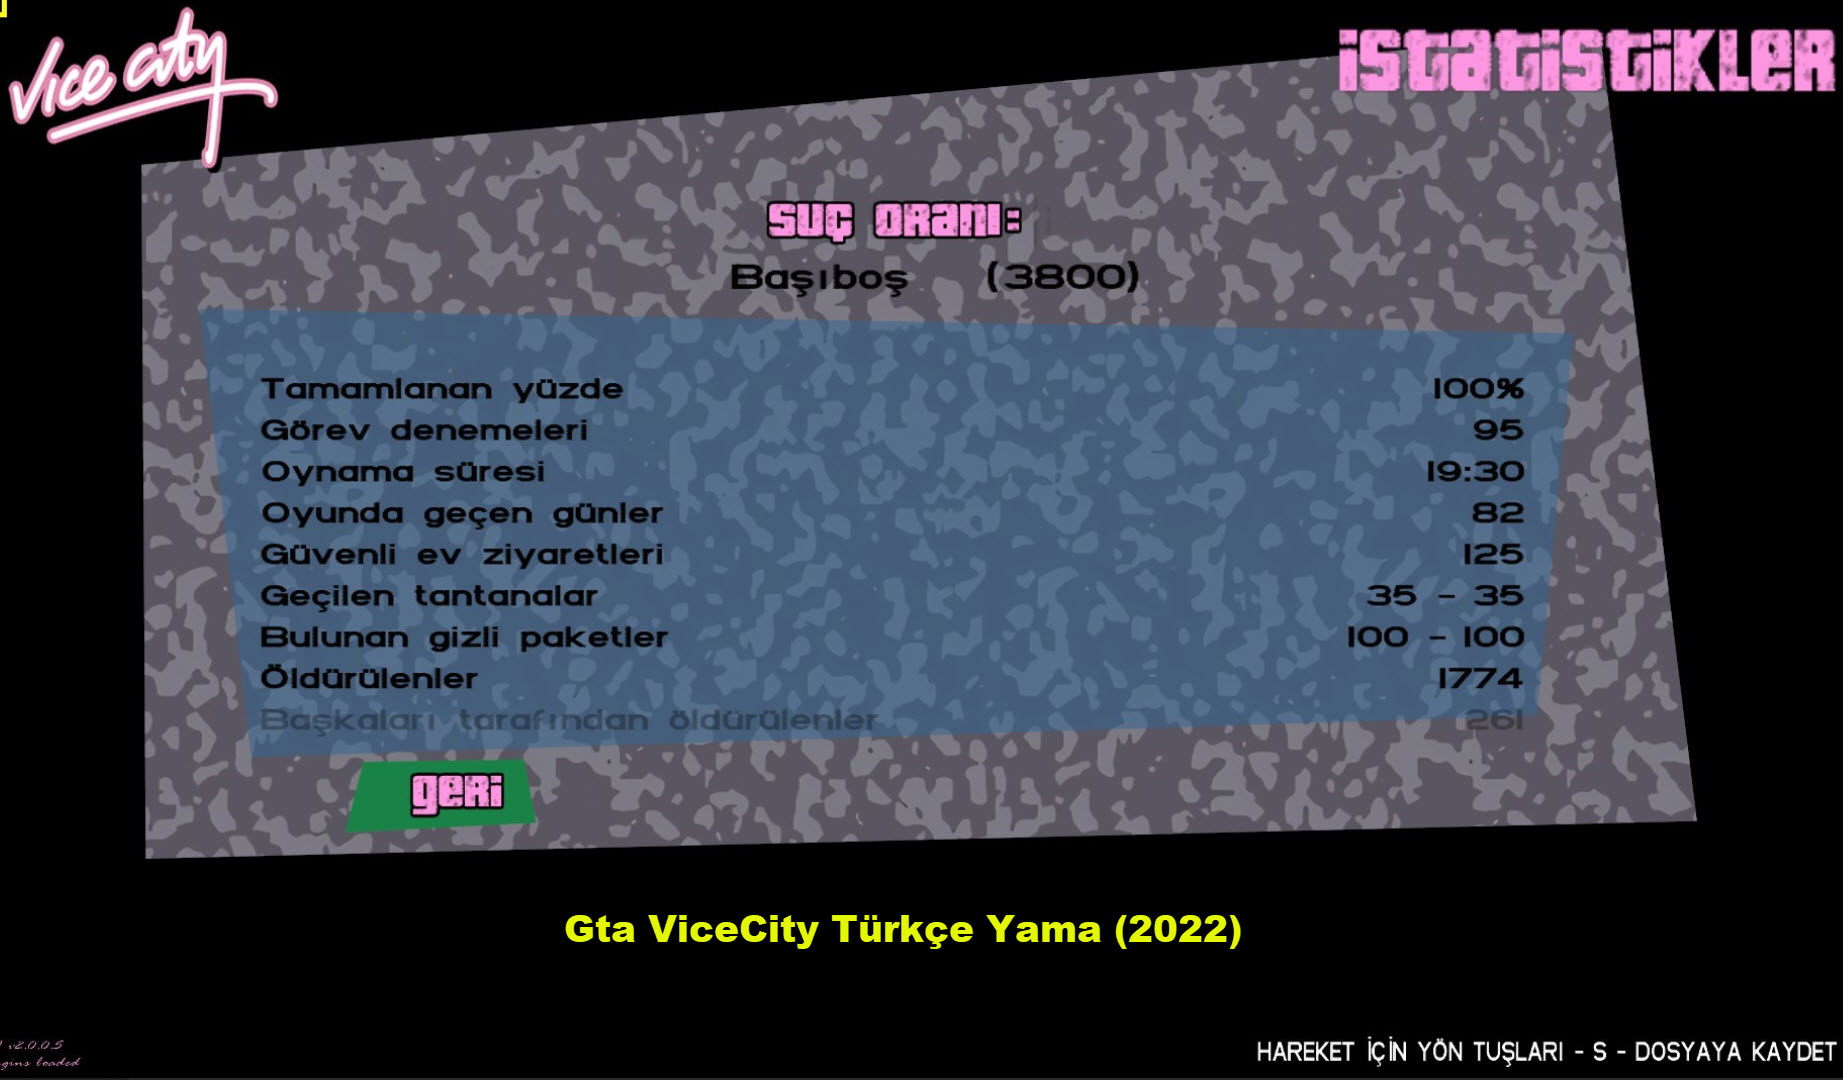 Gta Vicecity Turkce Yama 2022 1